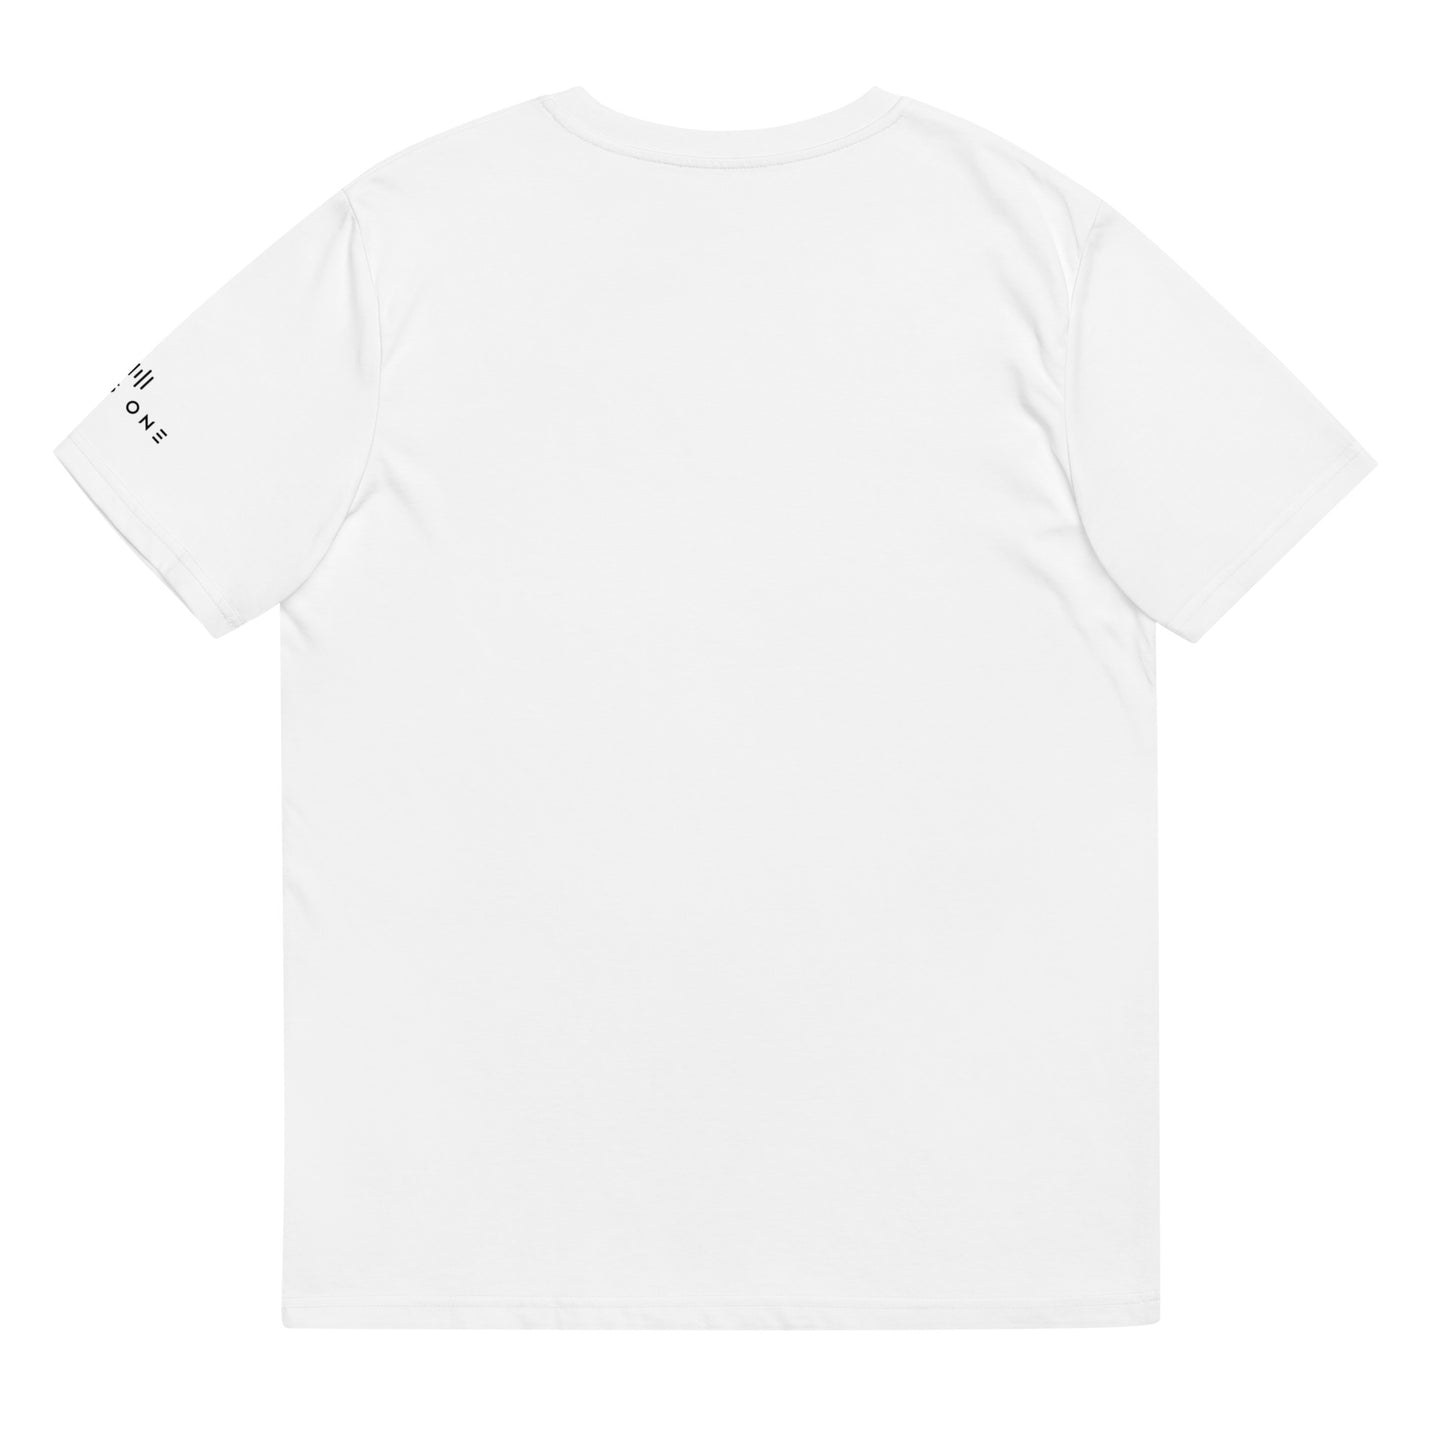 Hustle (v5) Unisex organic cotton t-shirt (Black Text)